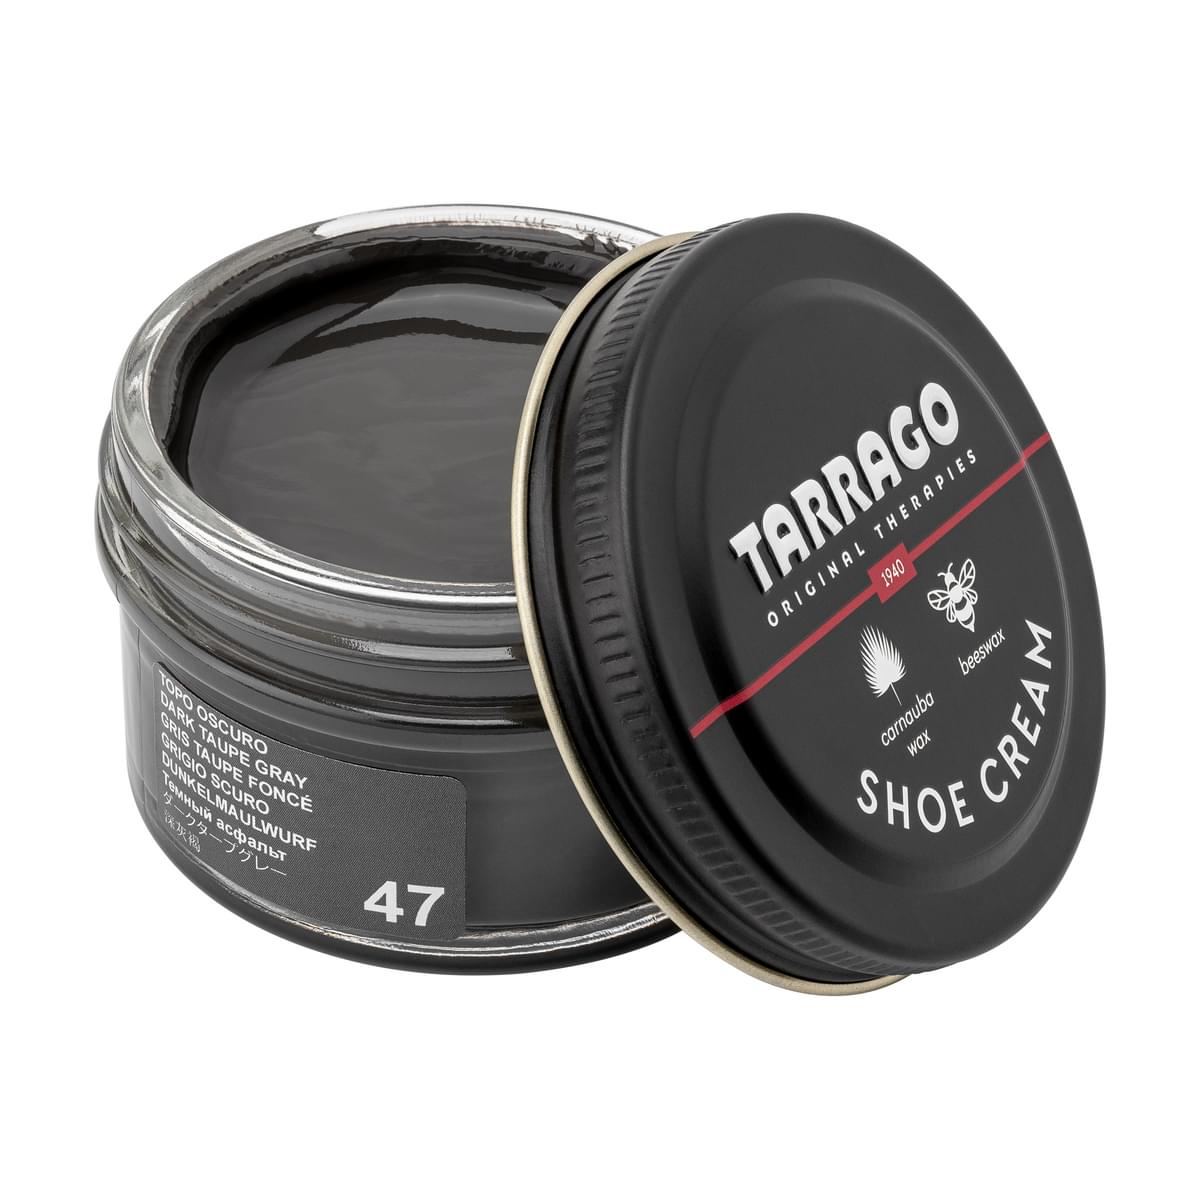 Tarrago Shoe Cream  - Dark Taupe Gray - 47